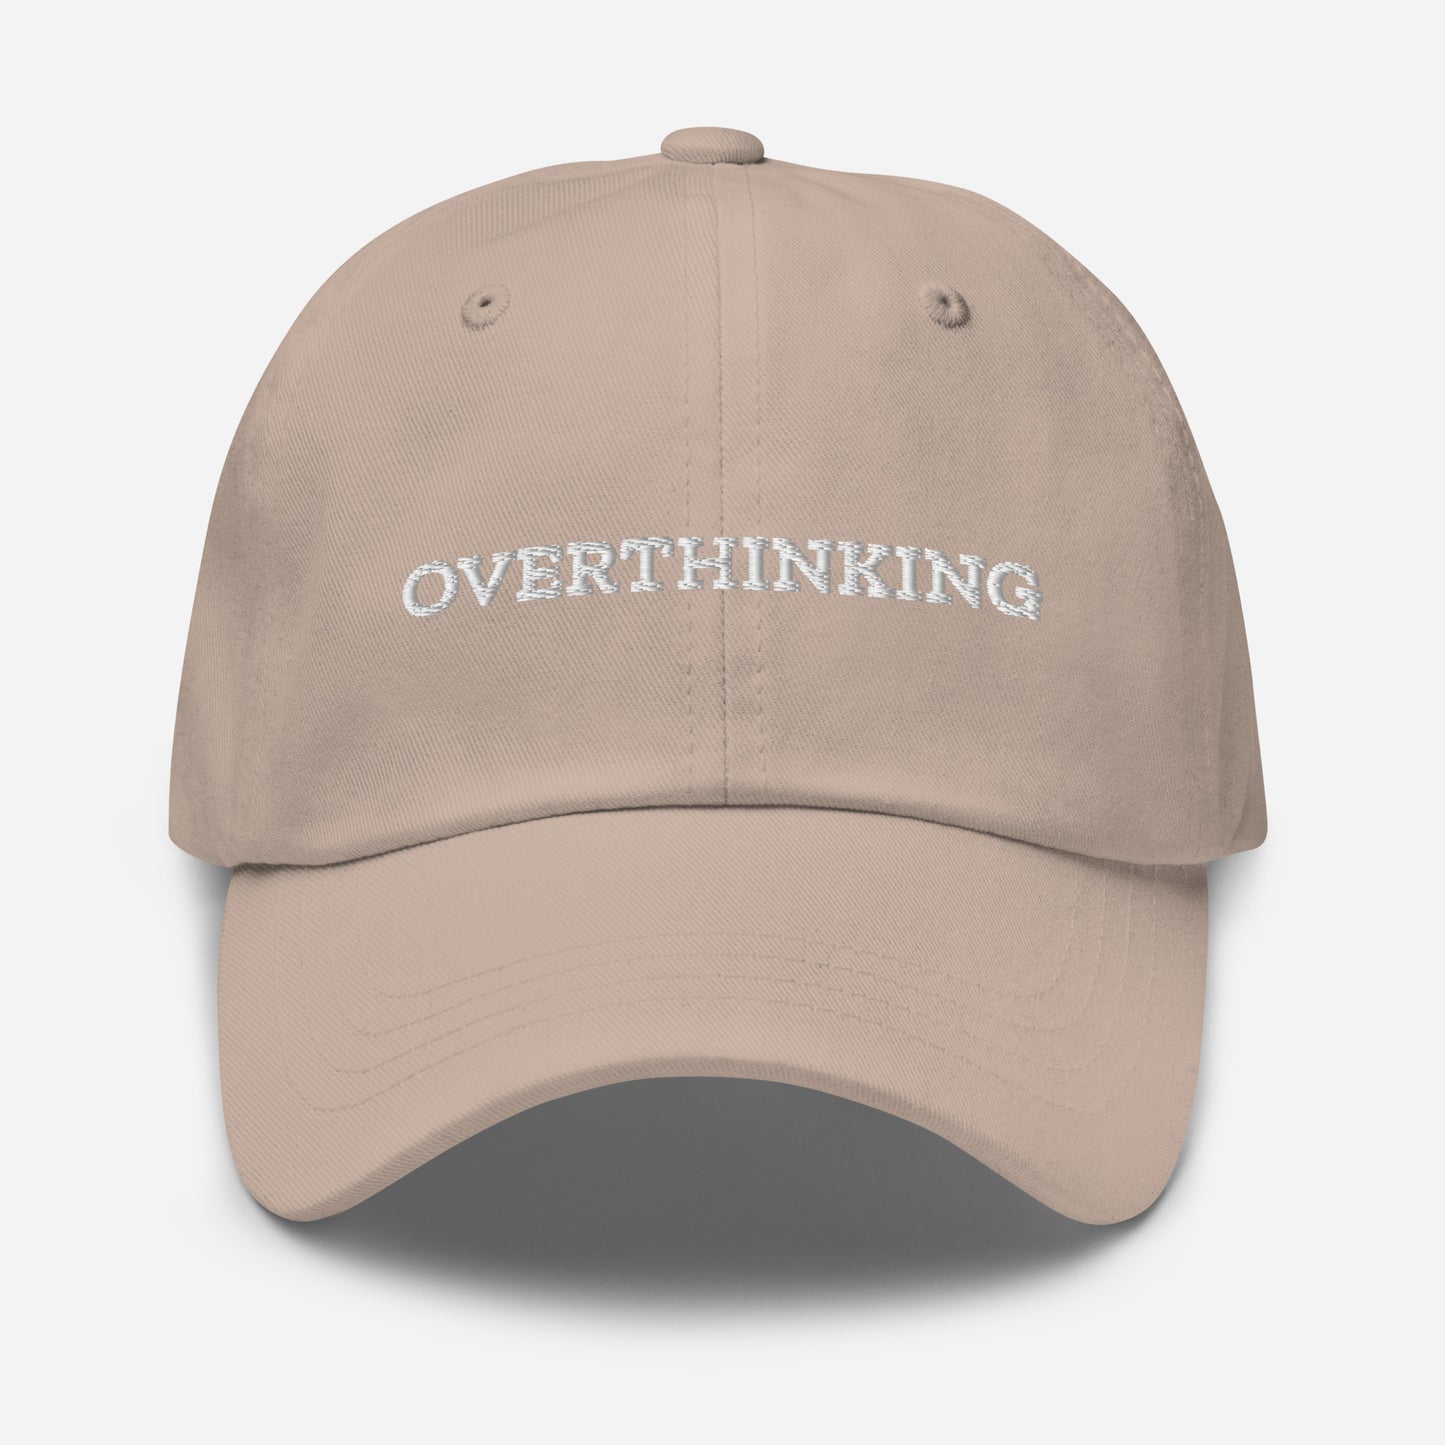 OVERTHINKING Dad Hat